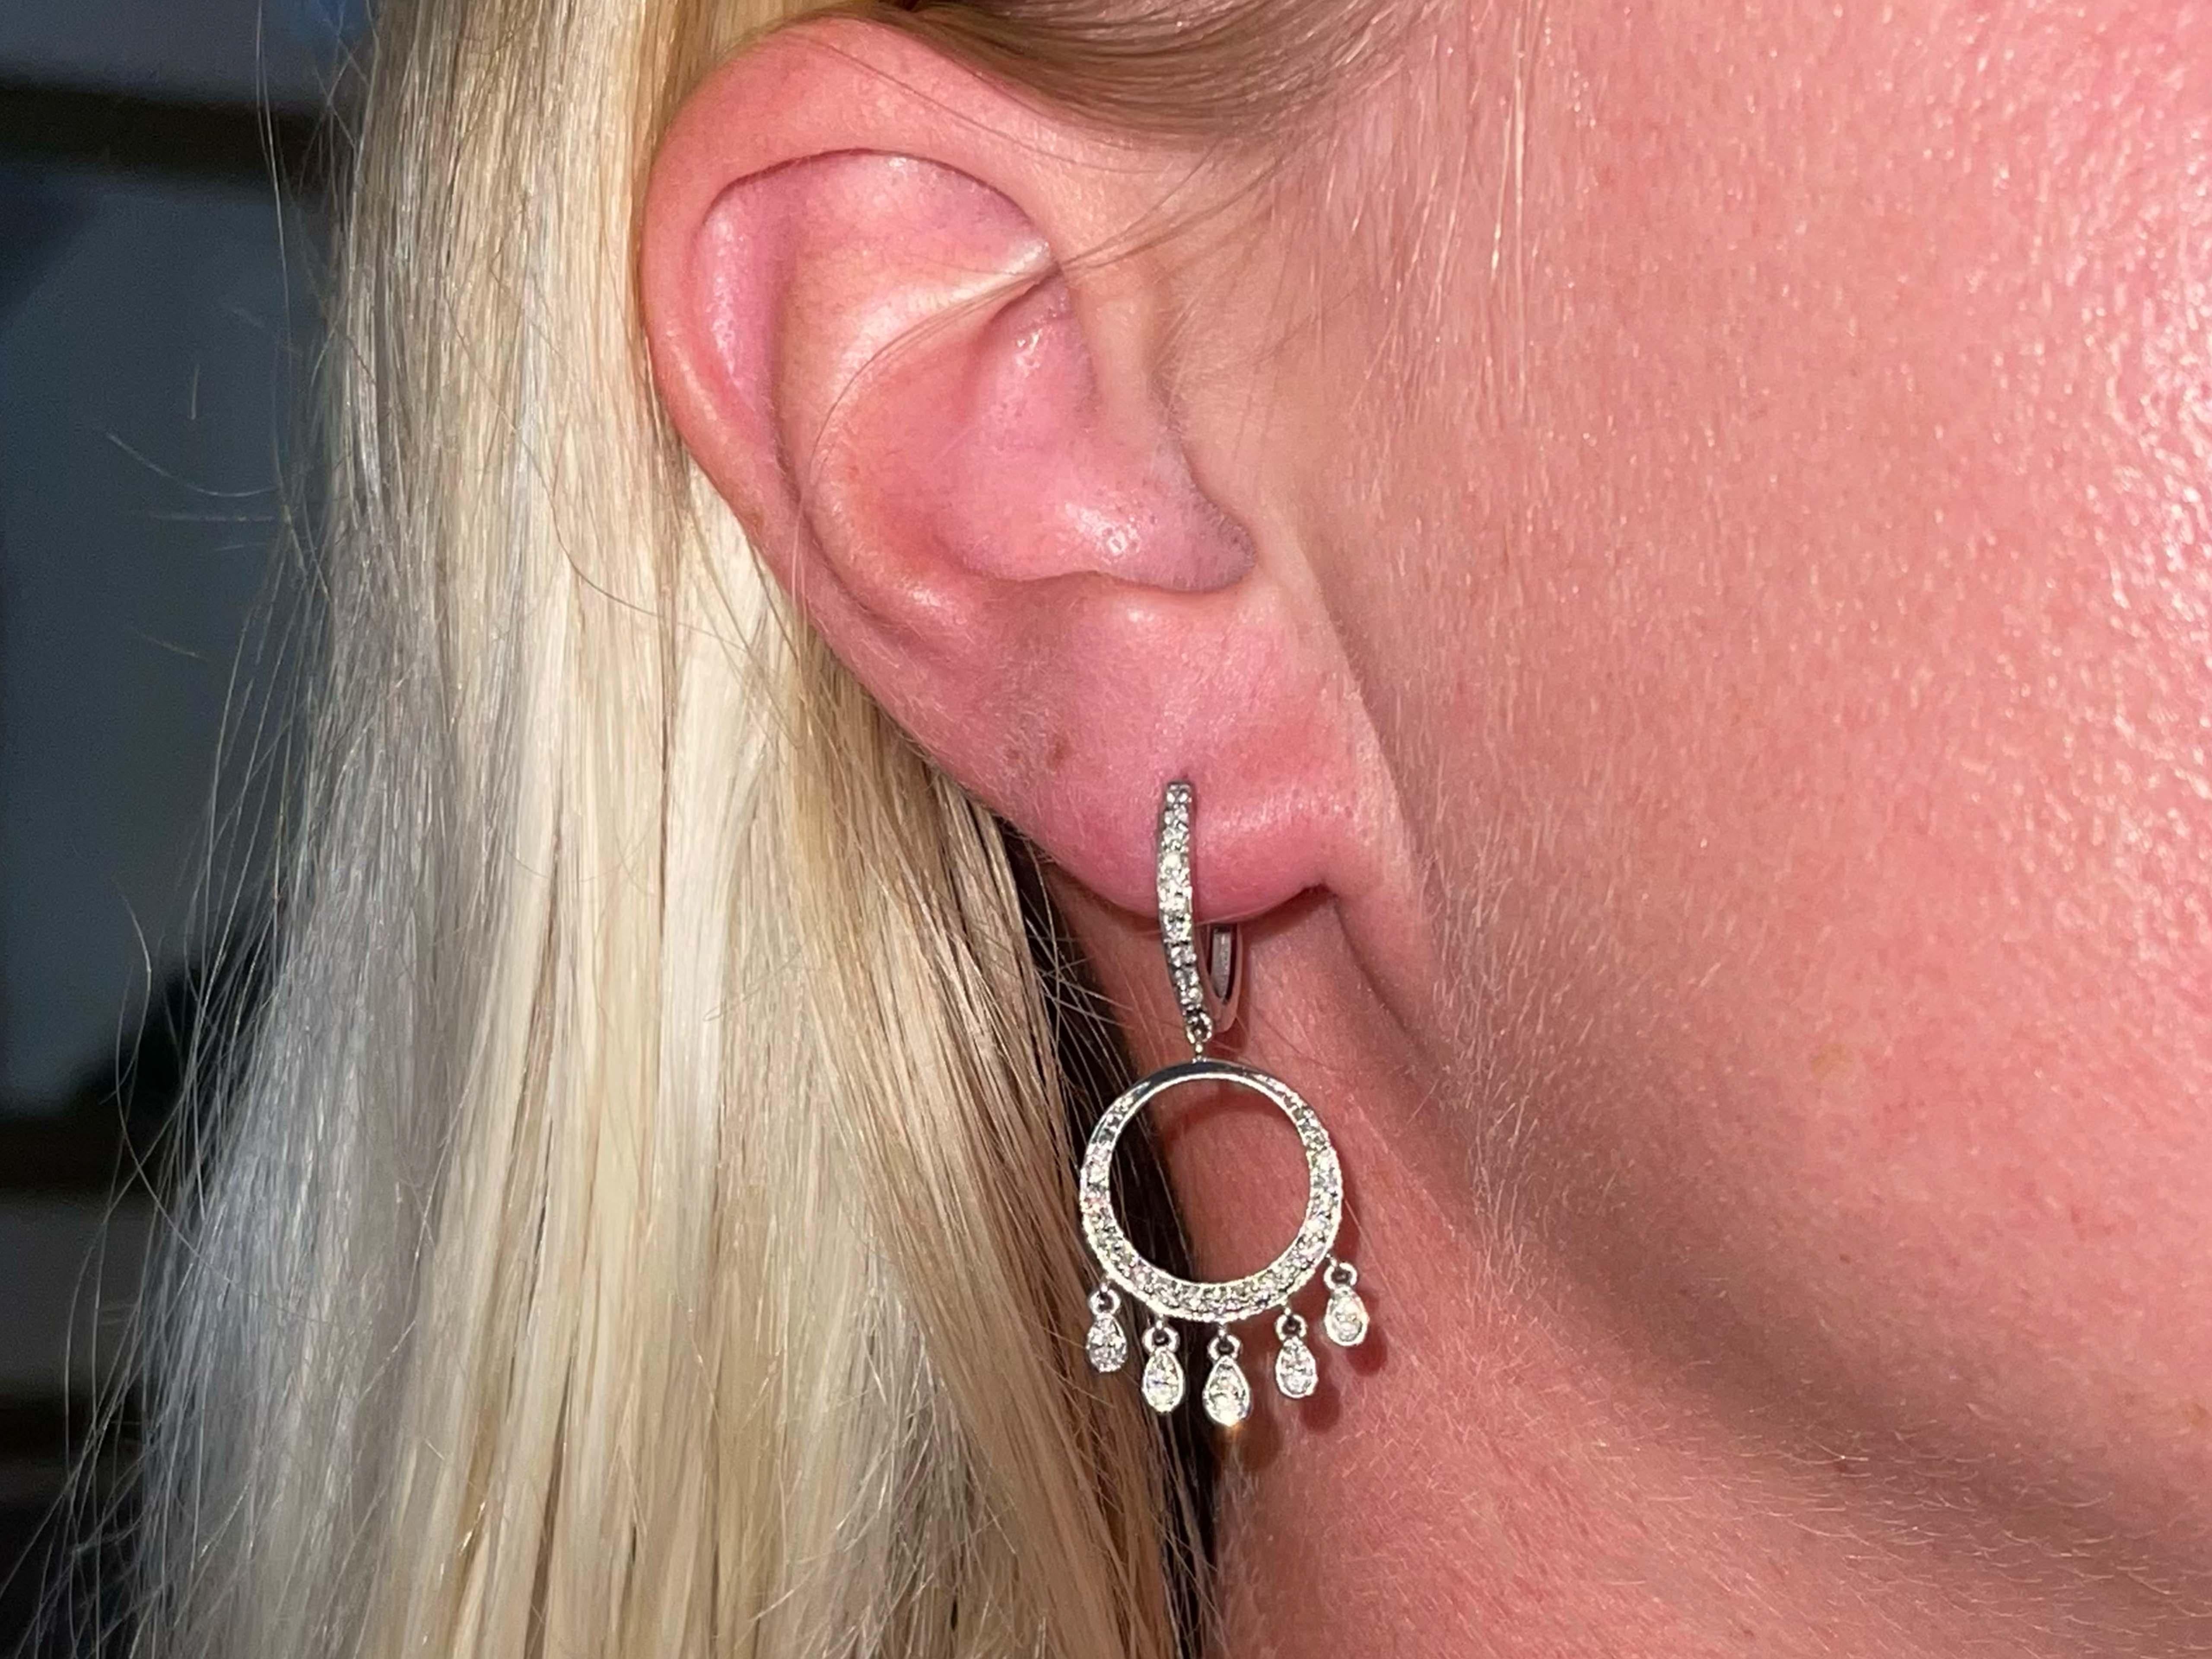 Earrings Specifications:

Metal: 18K White Gold

Total Weight: 5.4 Grams

Earring Diameter: 1.25